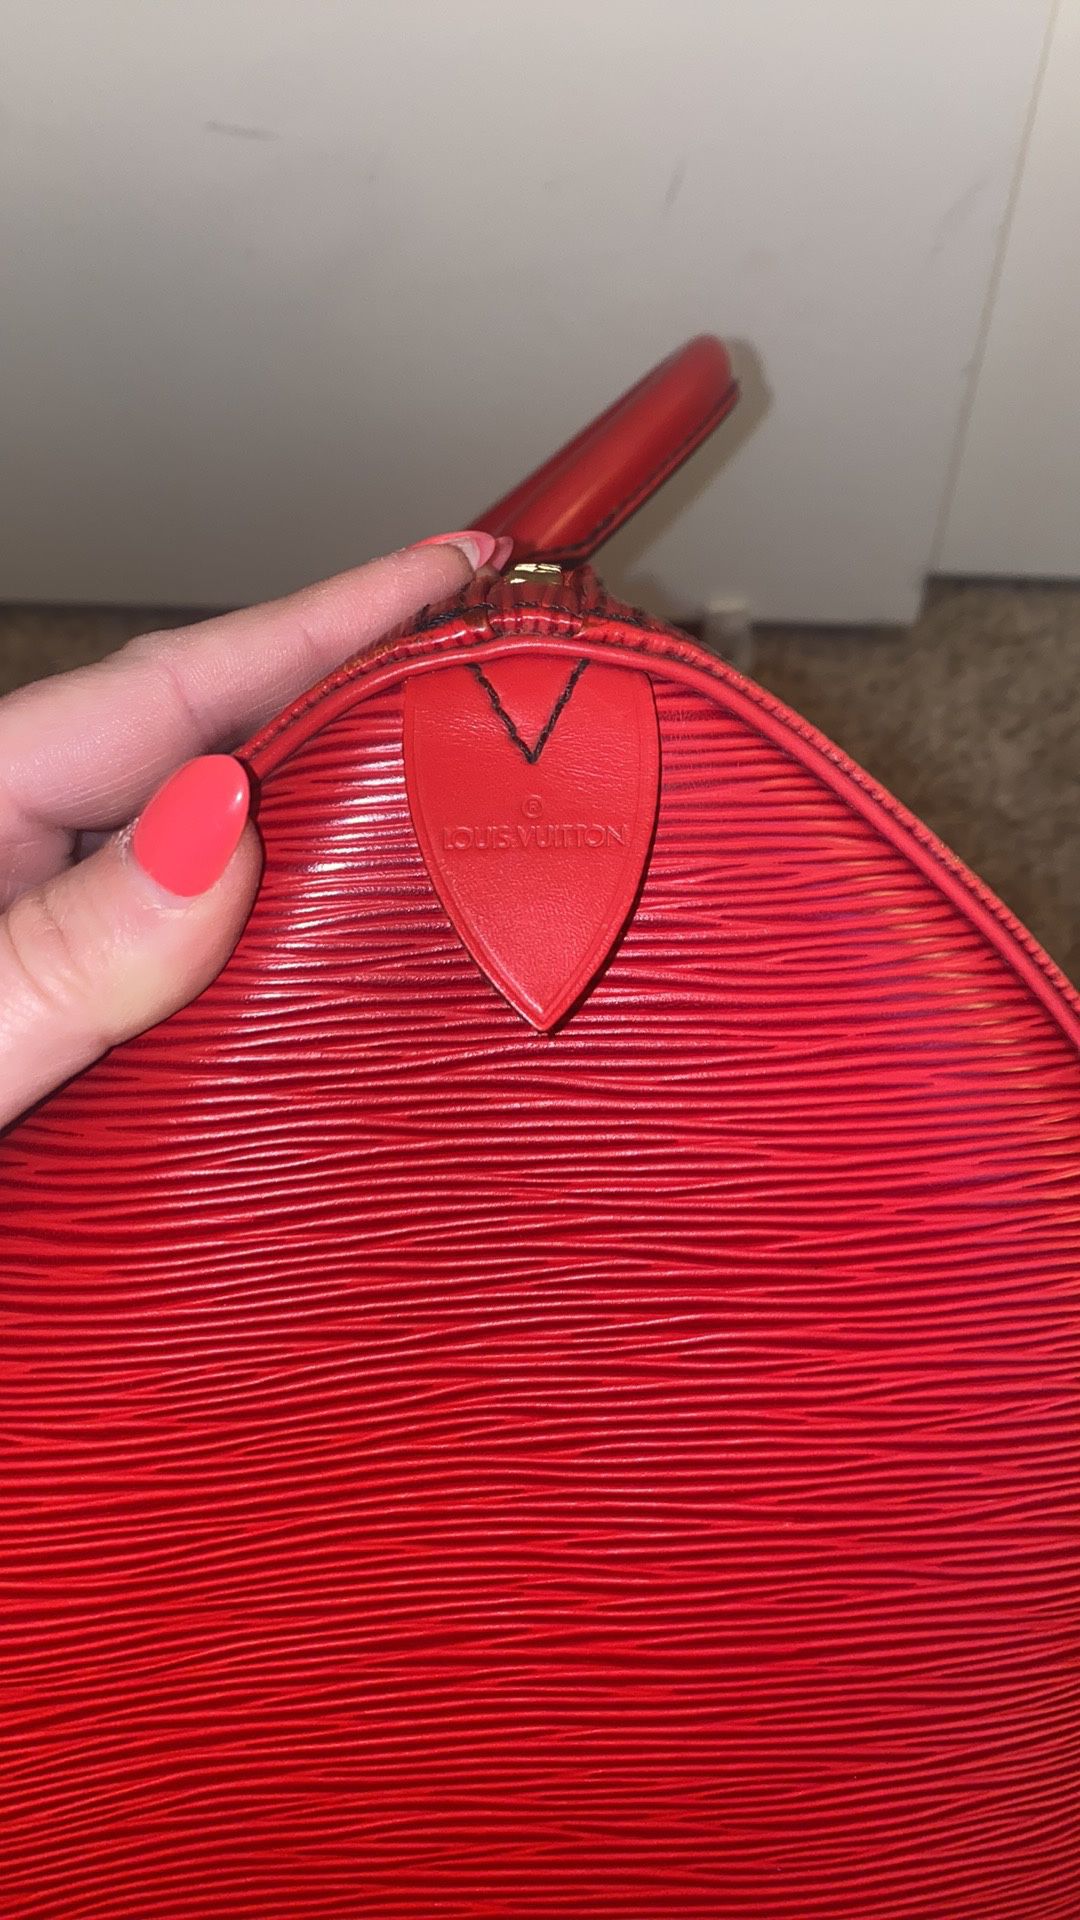 Louis Vuitton Speedy 35 Epi Red Bag for Sale in La Costa, CA